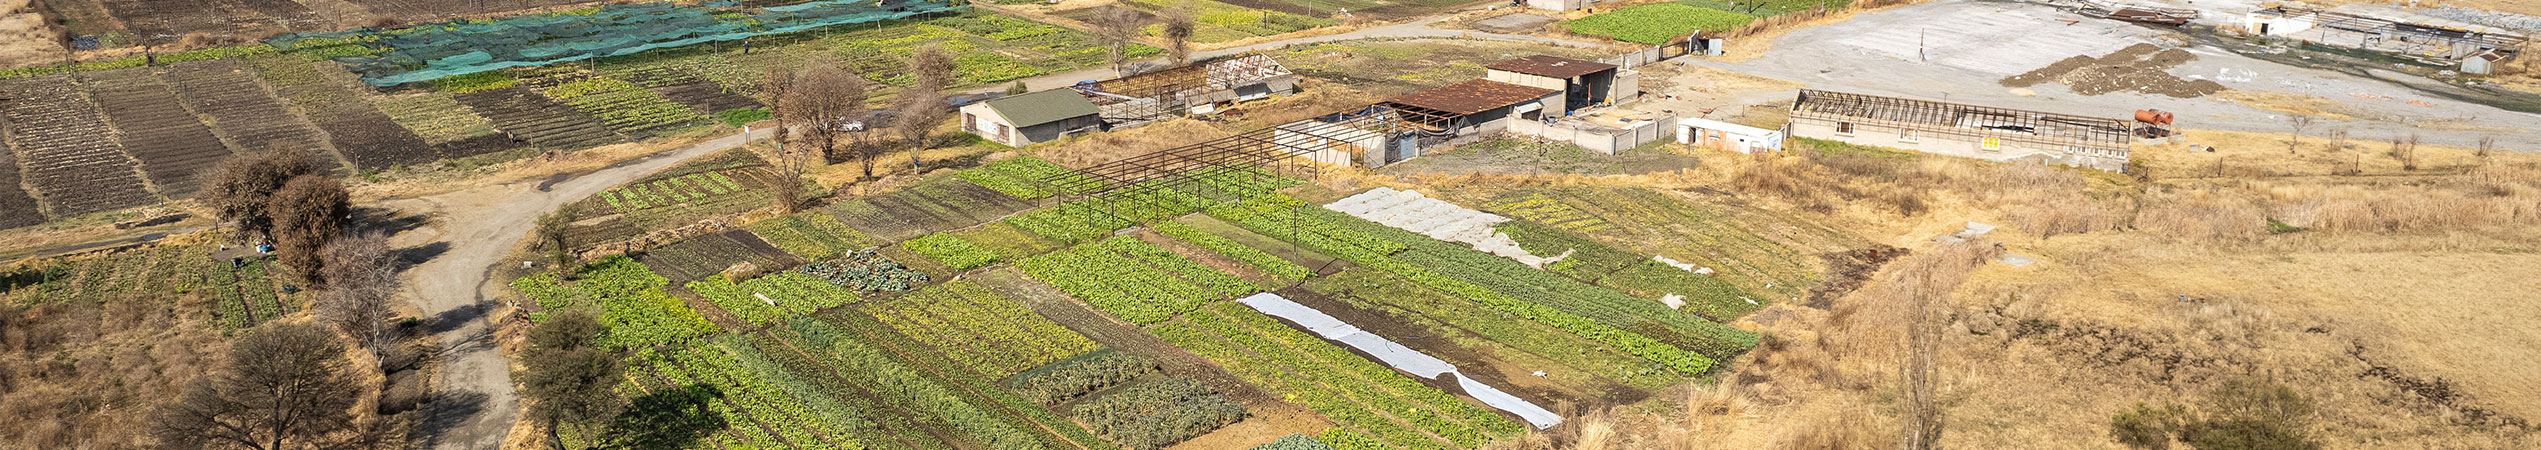 Esperanza farm in secunda